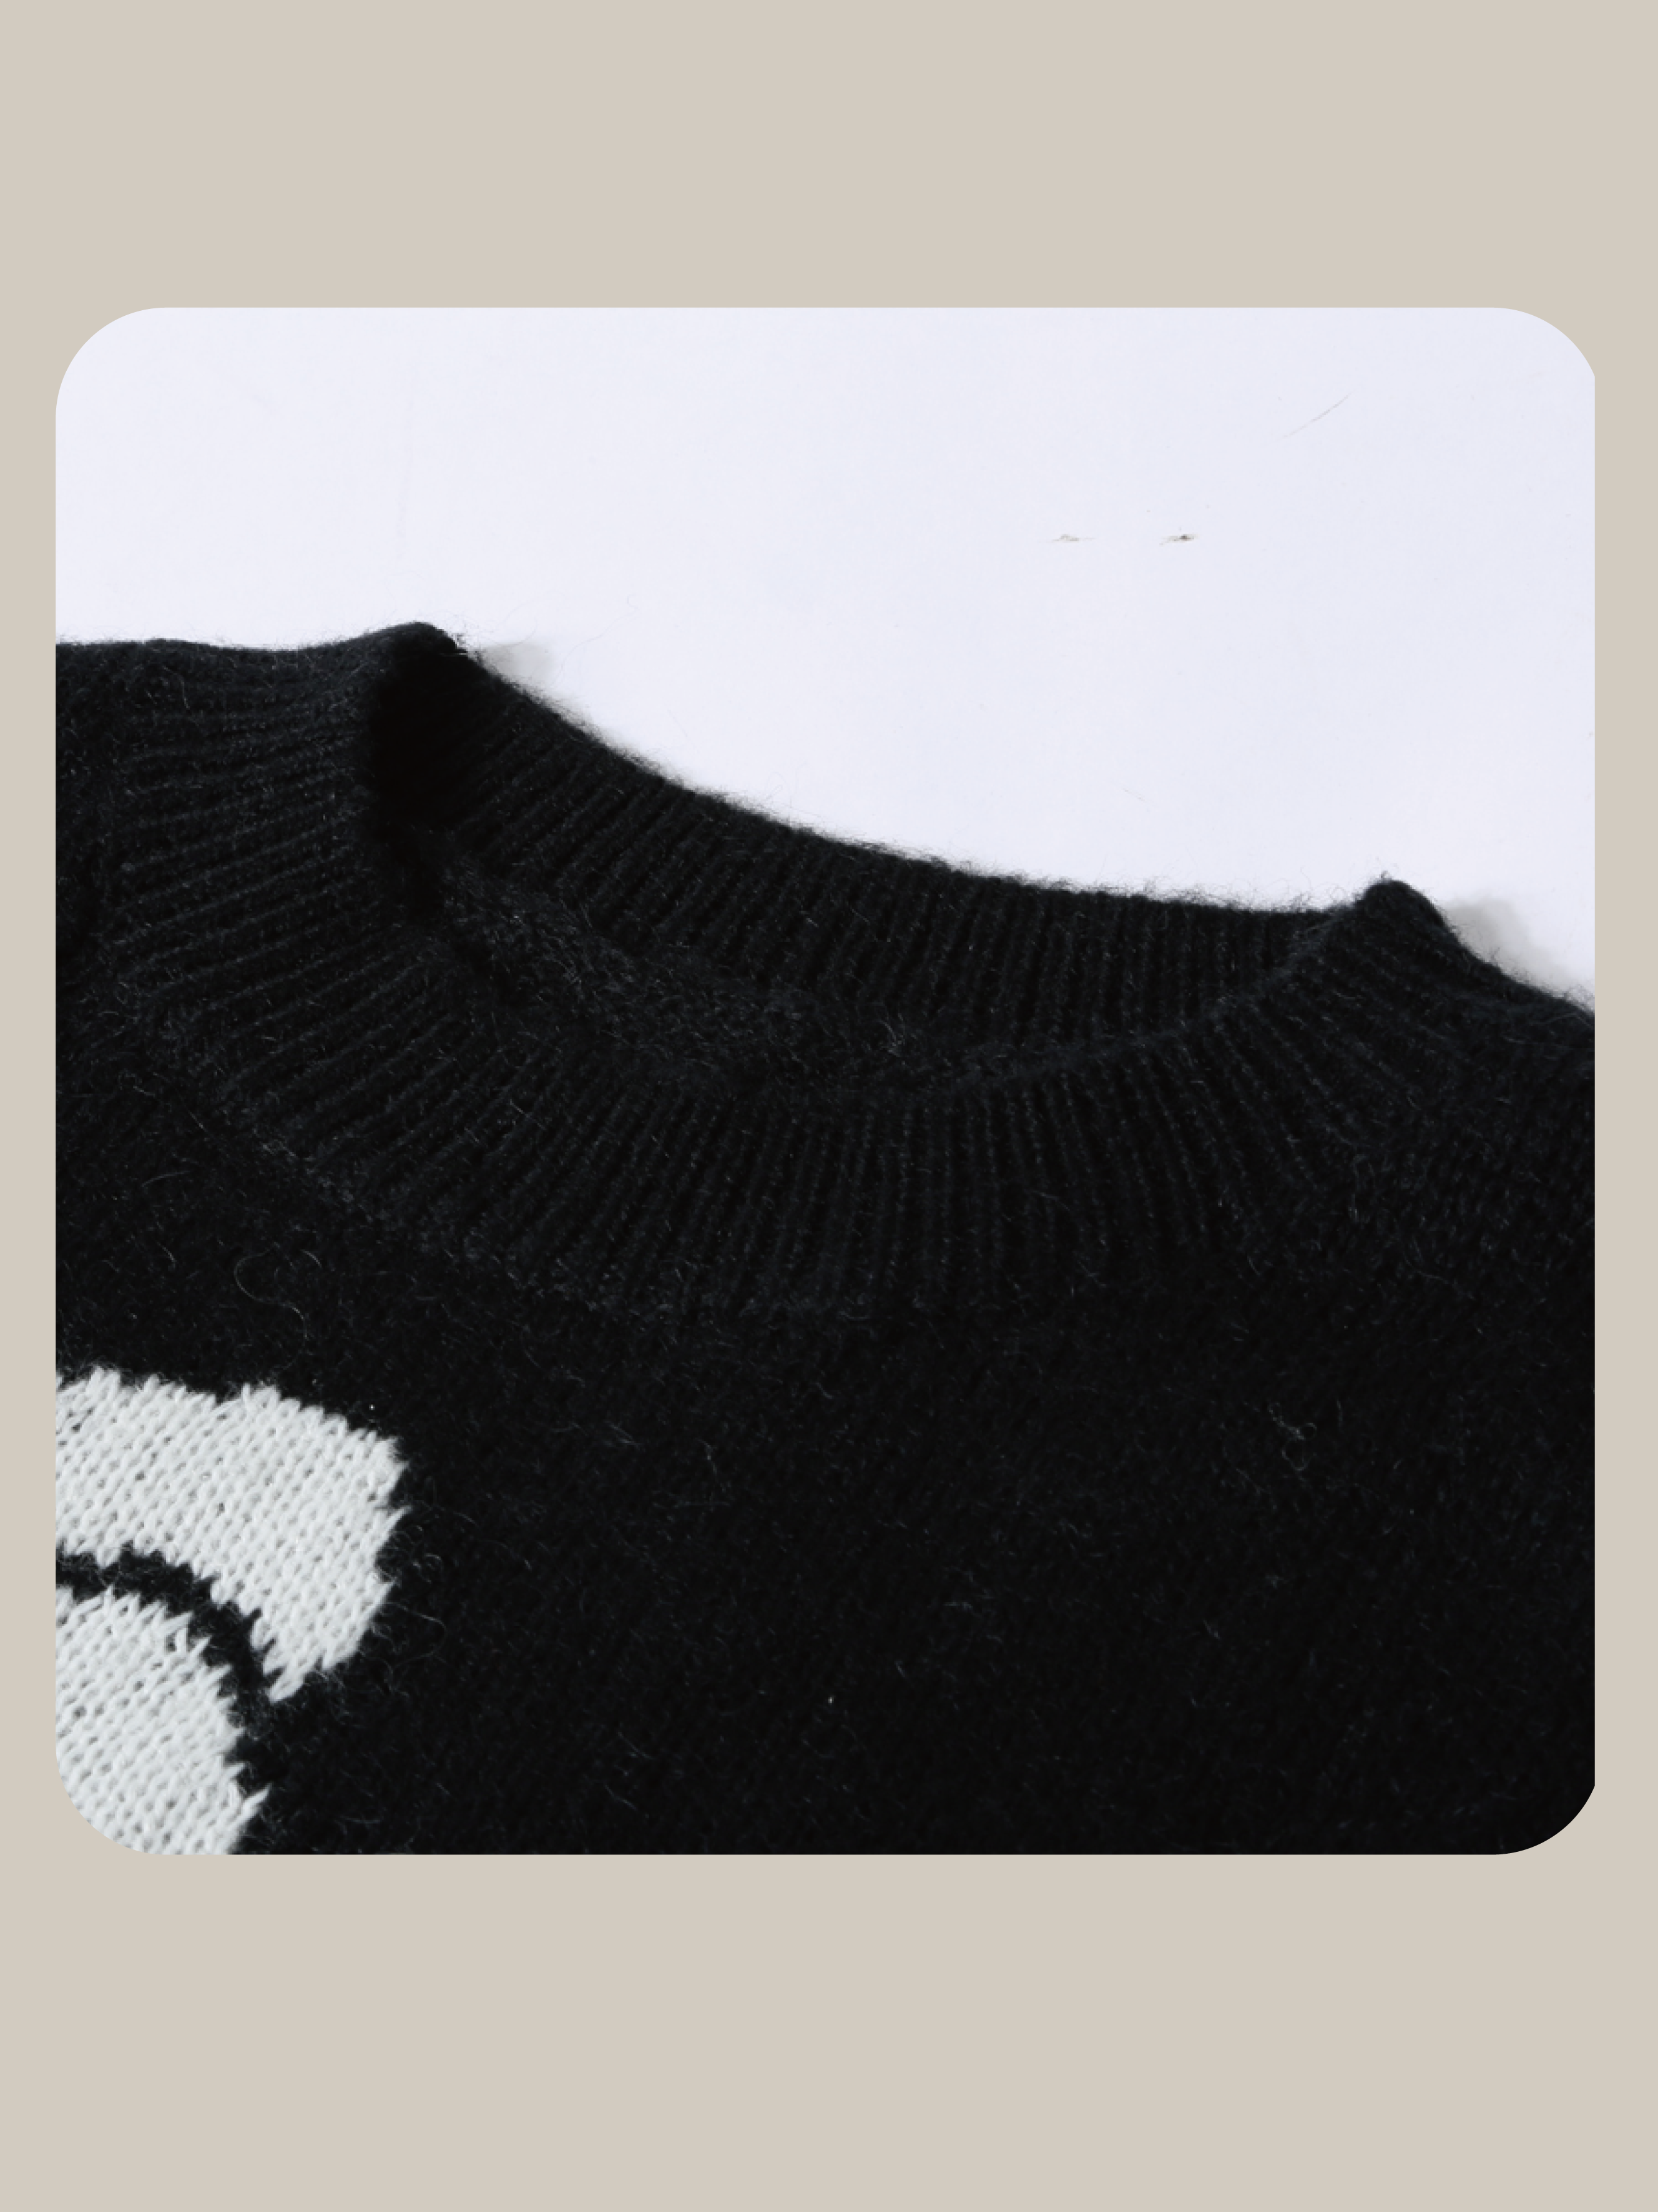 Big Ribbon Embroidery Sweater/ビッグリボン刺繍セーター